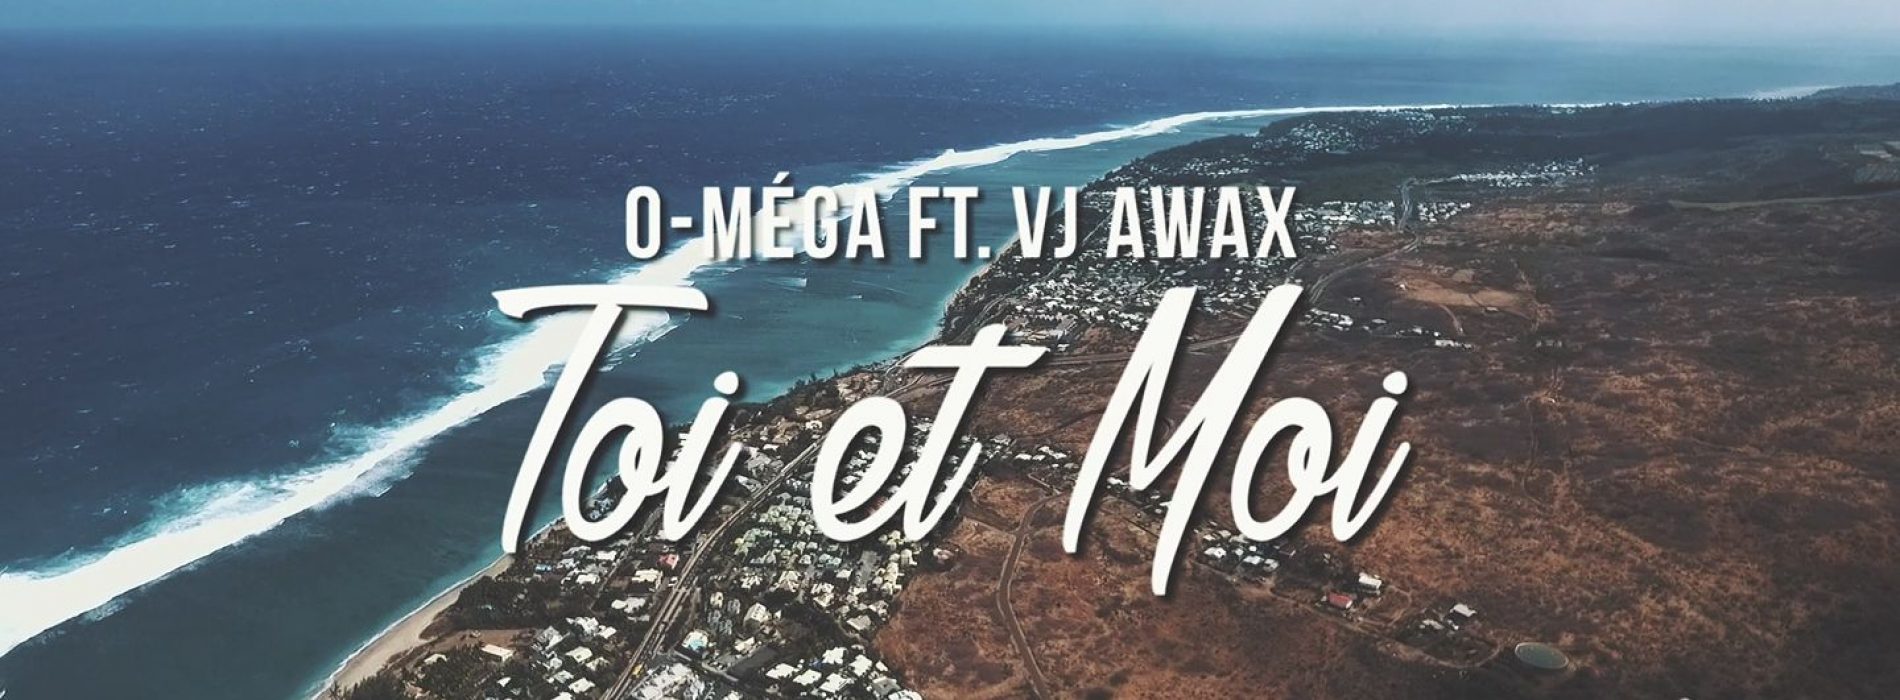 VJ AWAX  ft O-méga – Toi et moi (Run Hit) – Aôut 2017